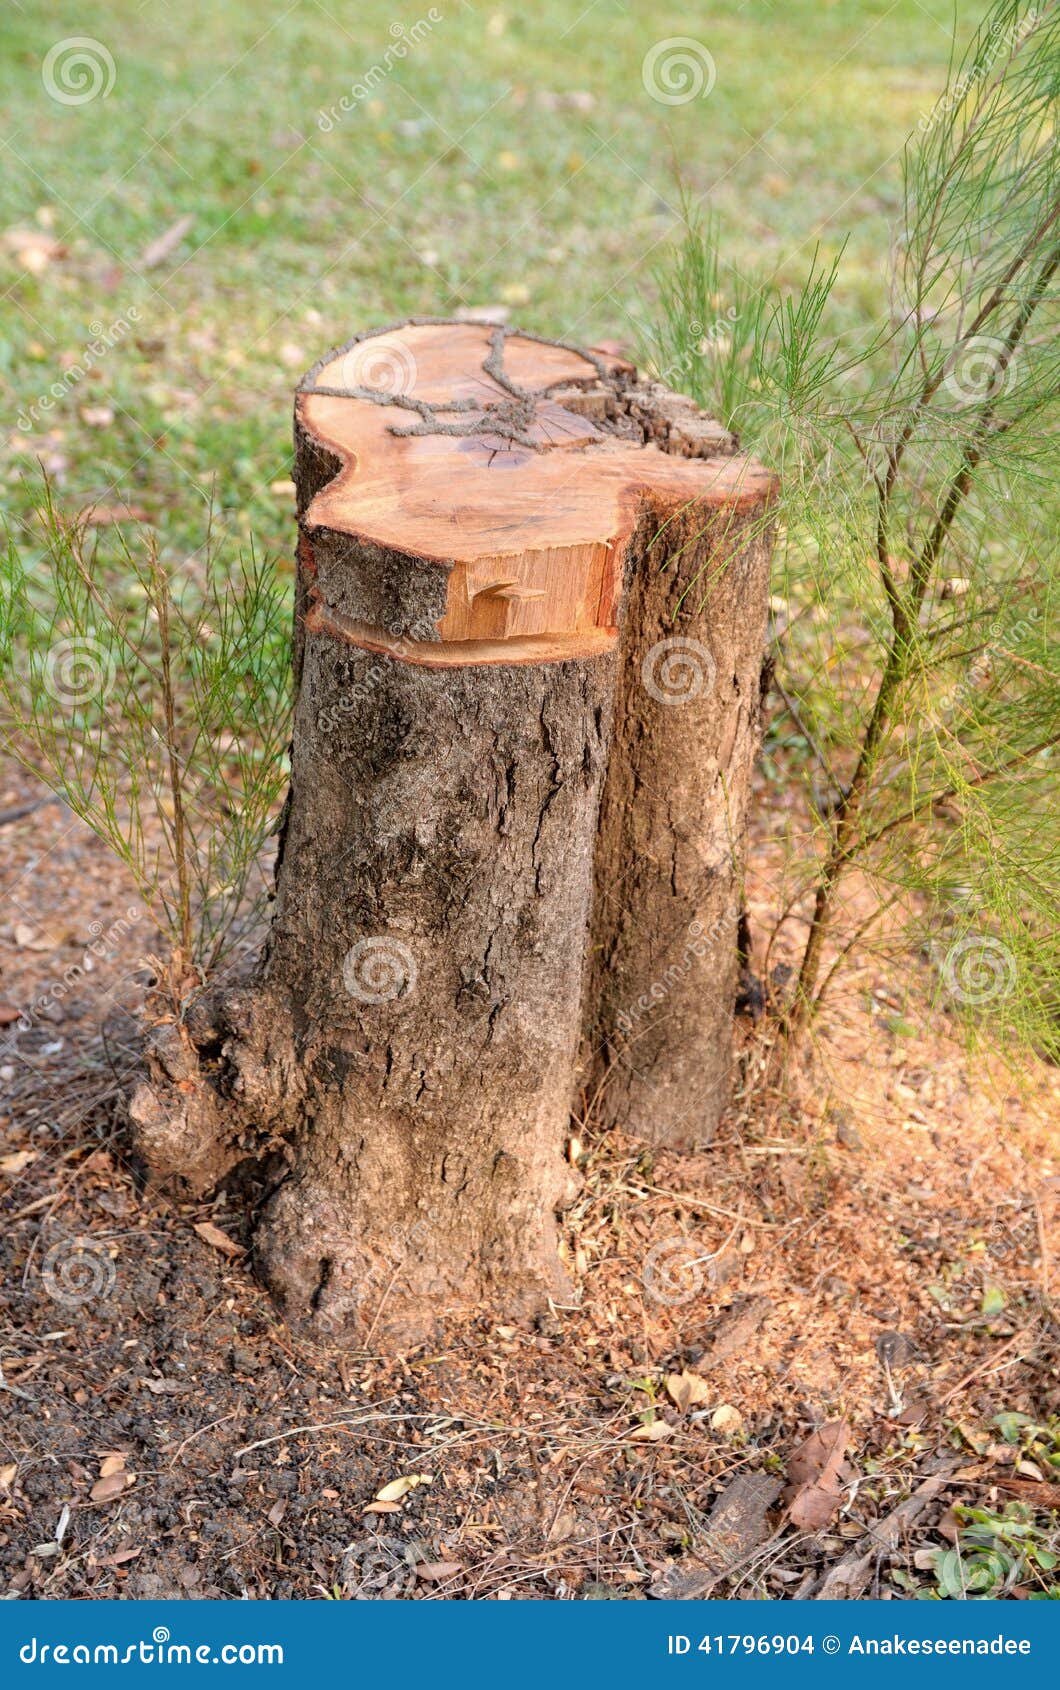 Clean cutt tree service in wilmington de